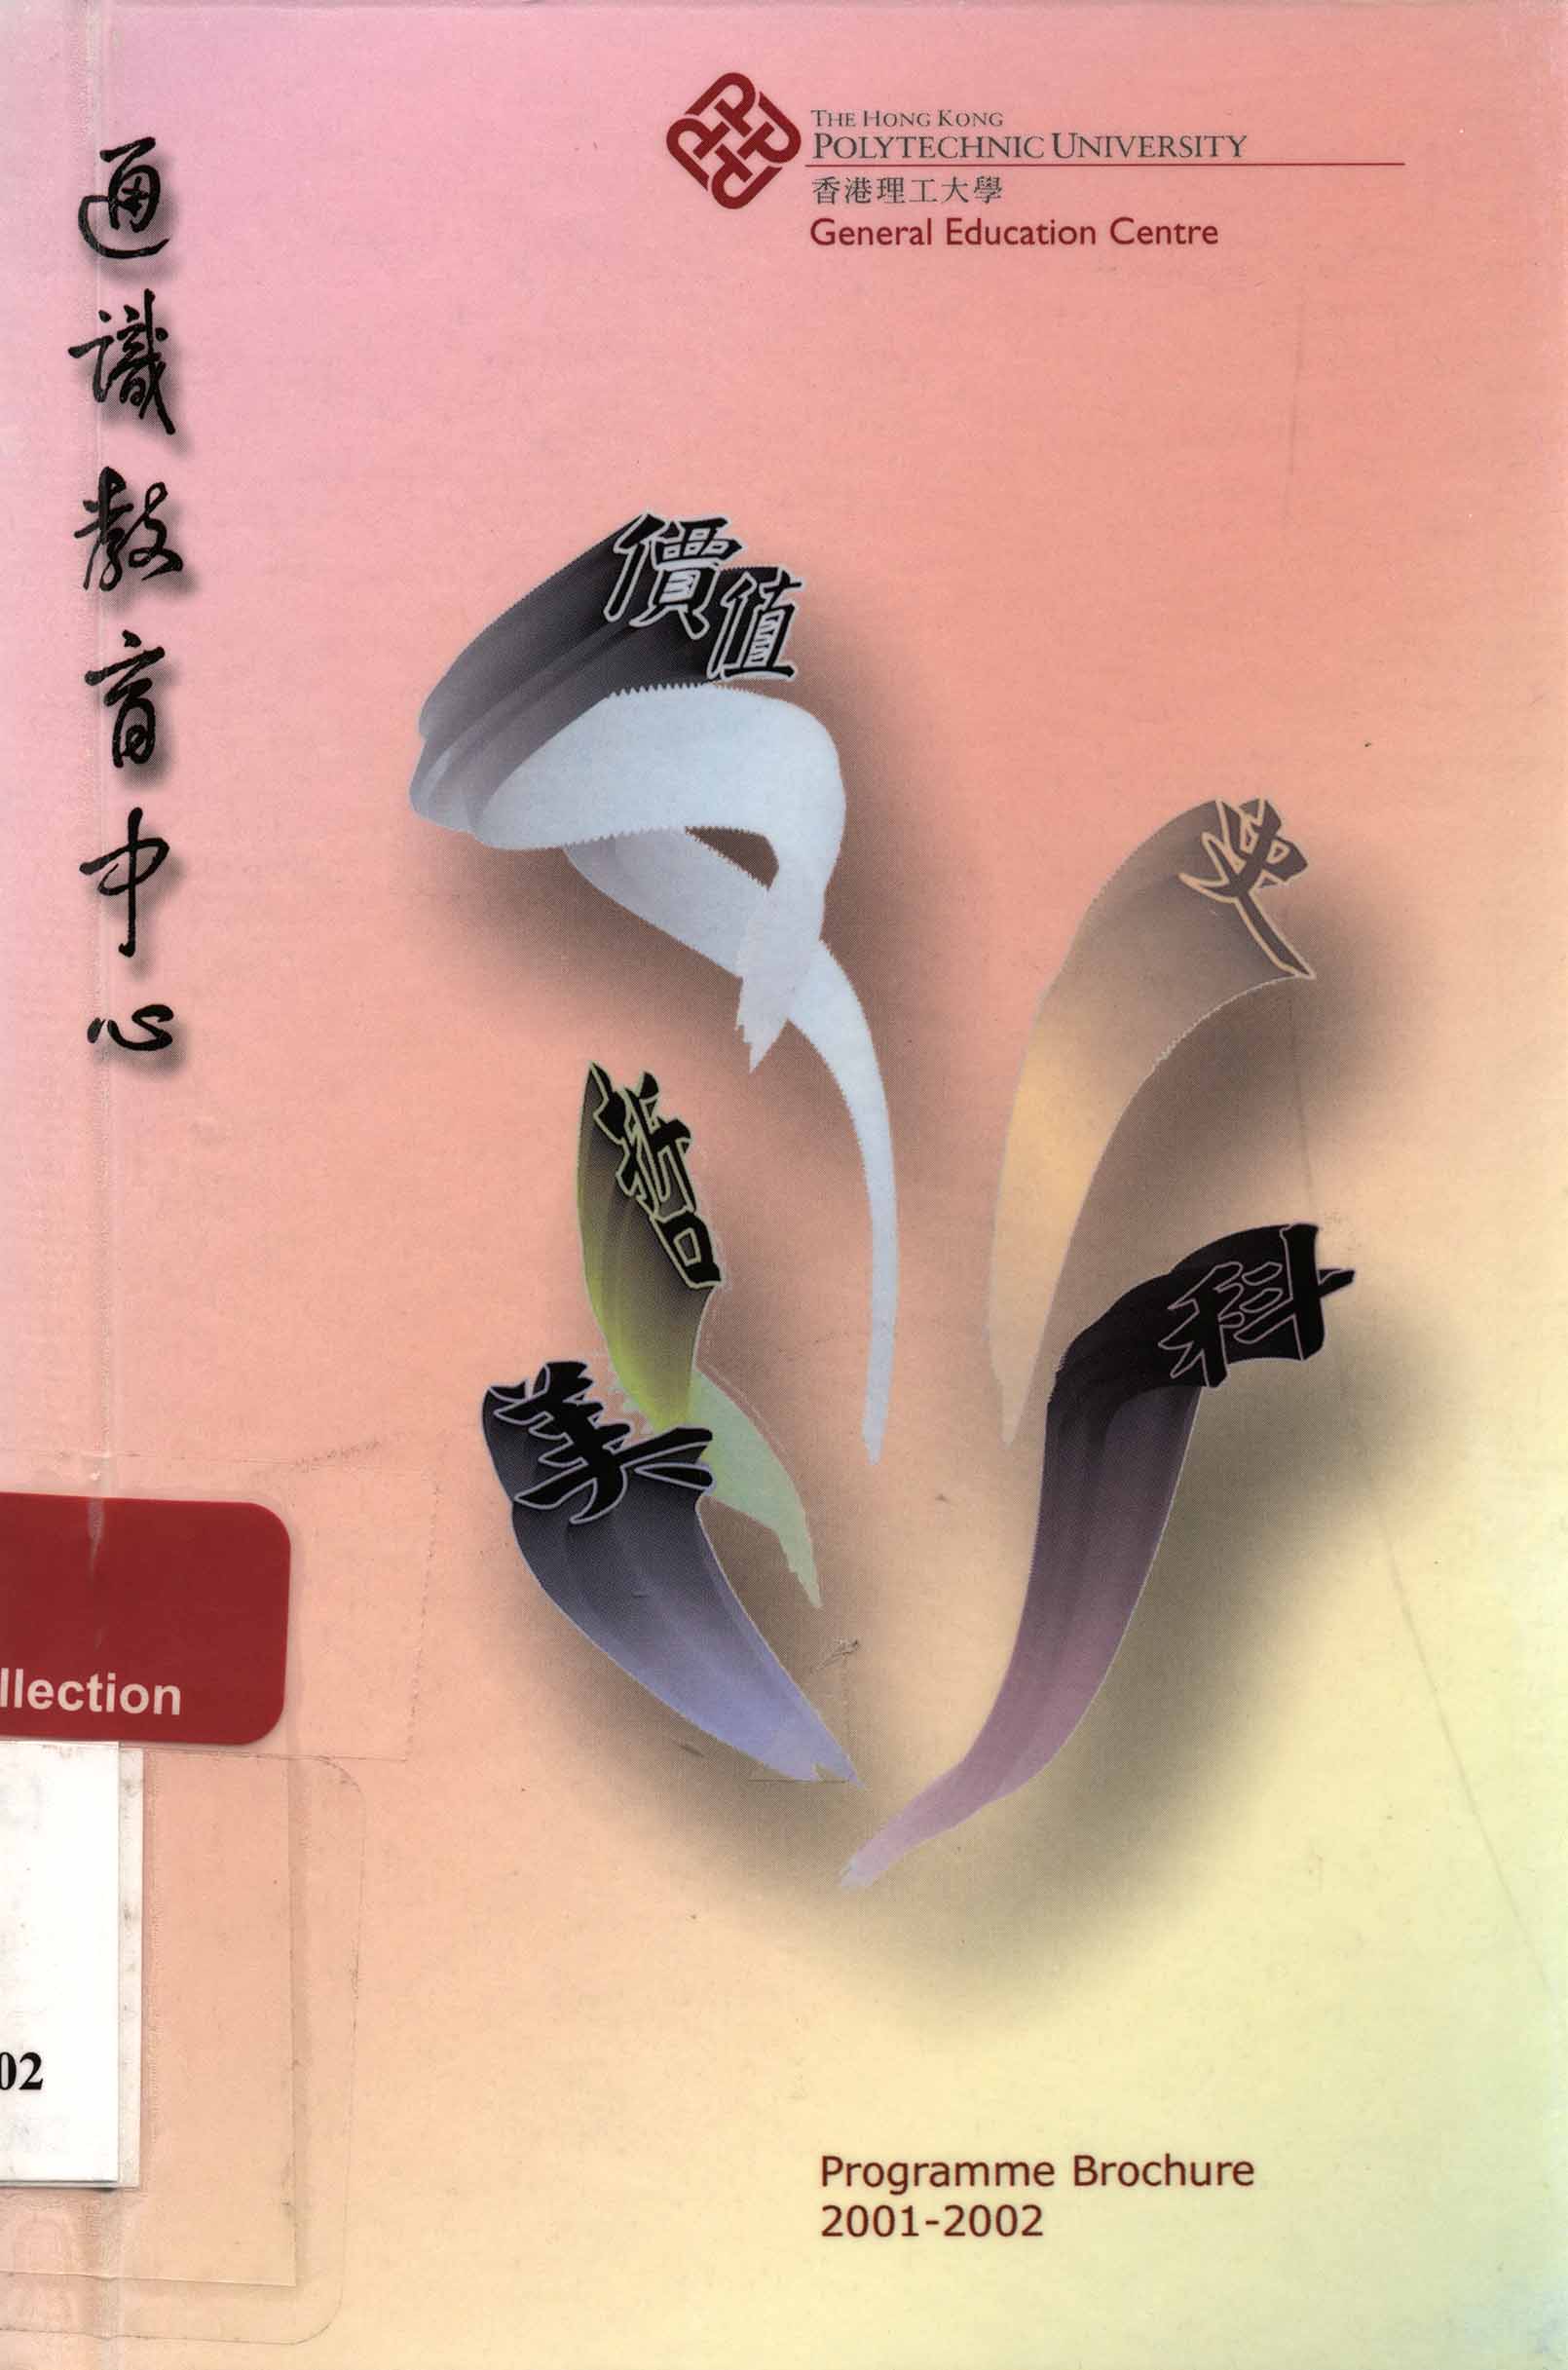 General Education Centre programme brochure 2001-2002